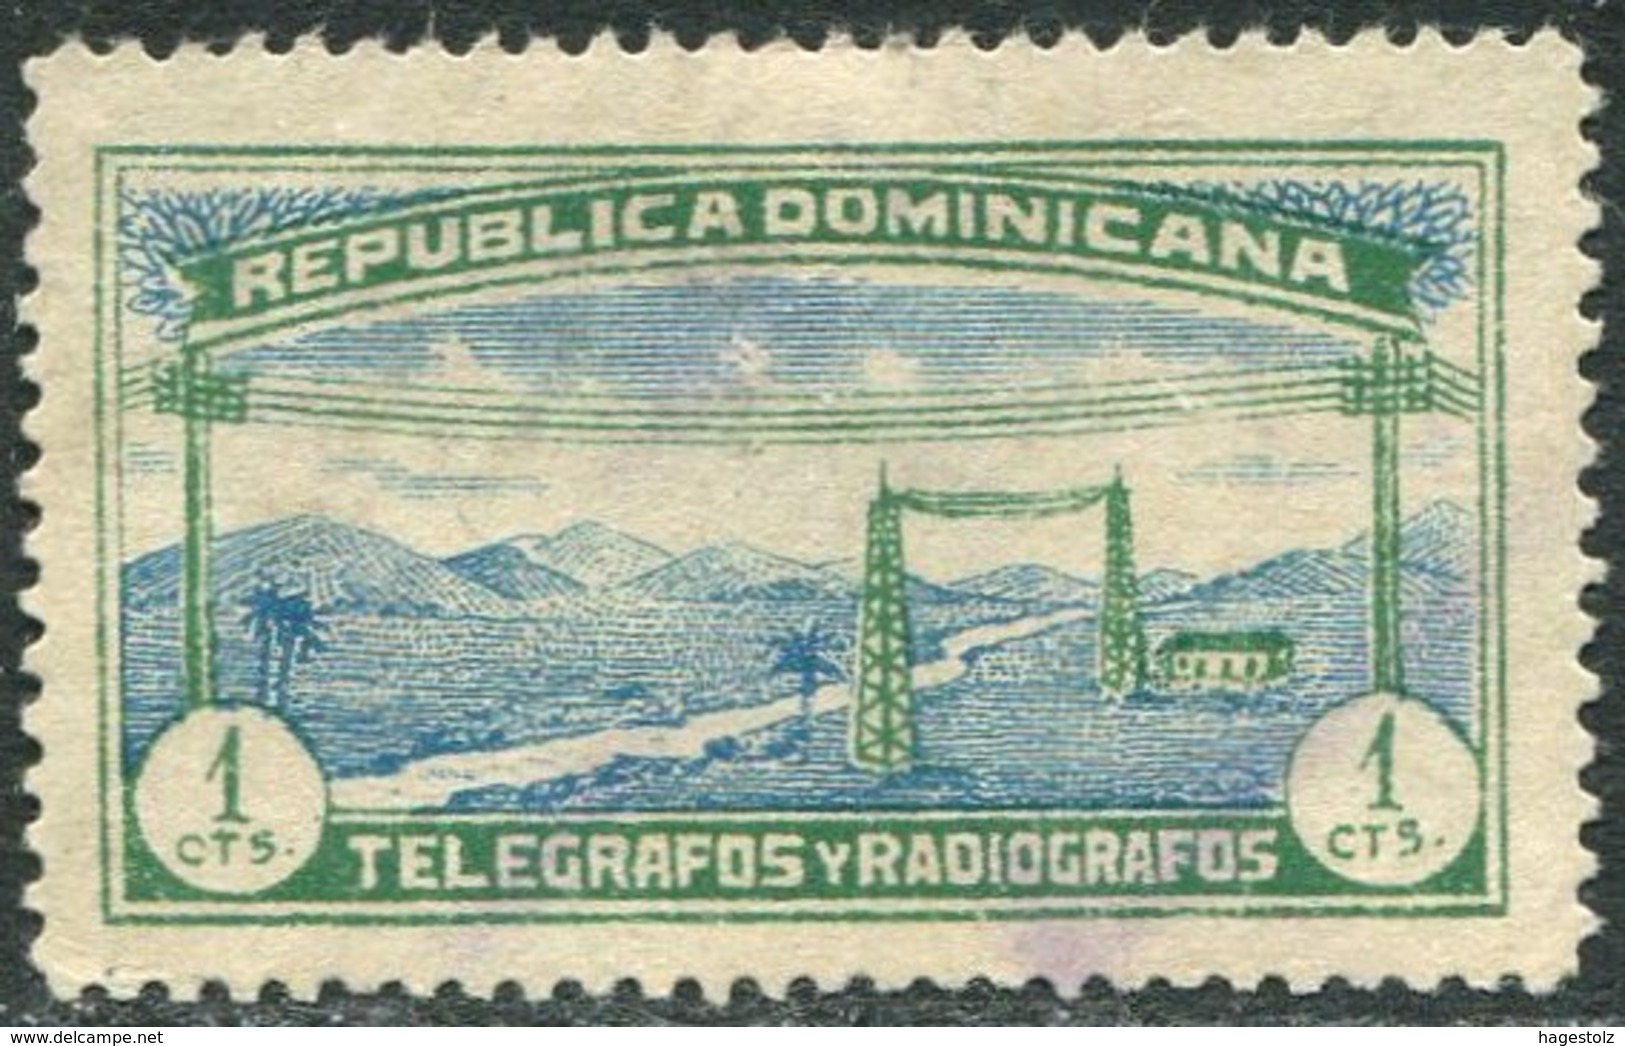 TELEGRAPH Dominicana 1920 Dominican Republic 1 Cts Perf. 11,5 Telegrafos Y Radiografos Télégraphe République Dominicaine - Dominican Republic